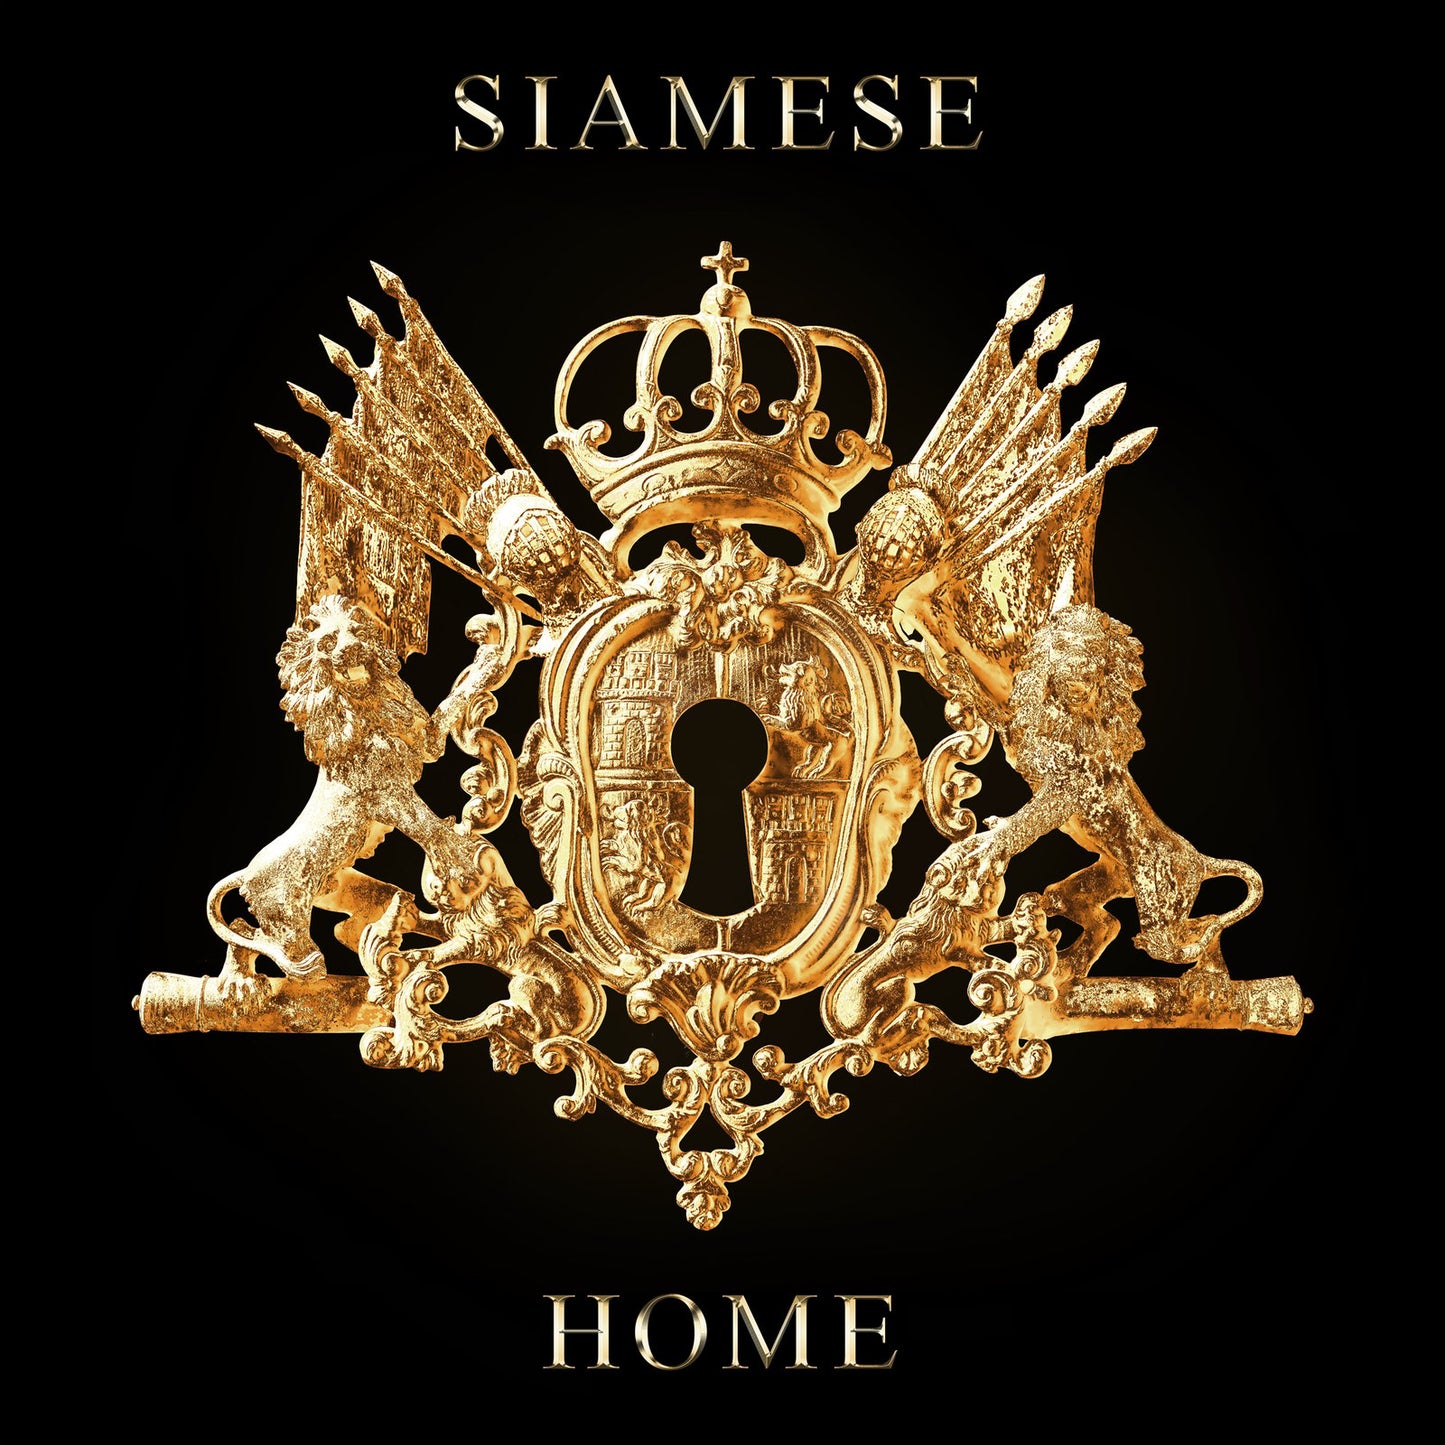 Siamese "Home" CD